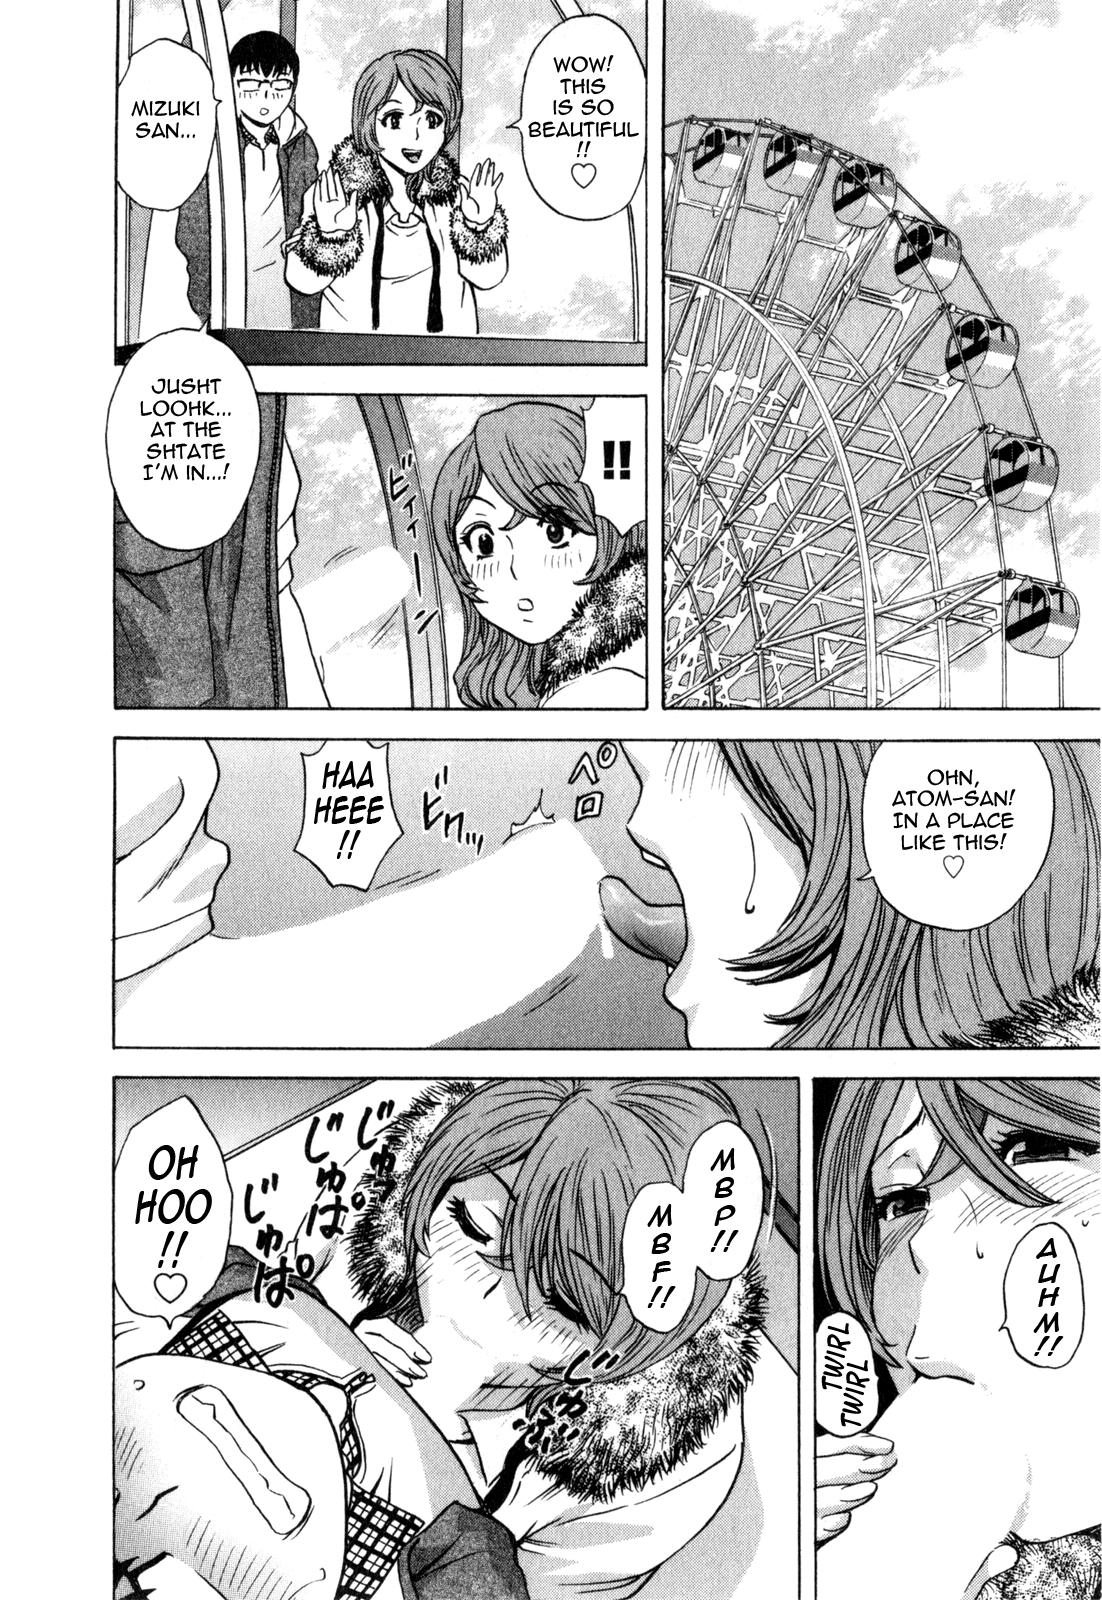 [Hidemaru] Life with Married Women Just Like a Manga 3 - Ch. 1-5 [English] {Tadanohito} 34